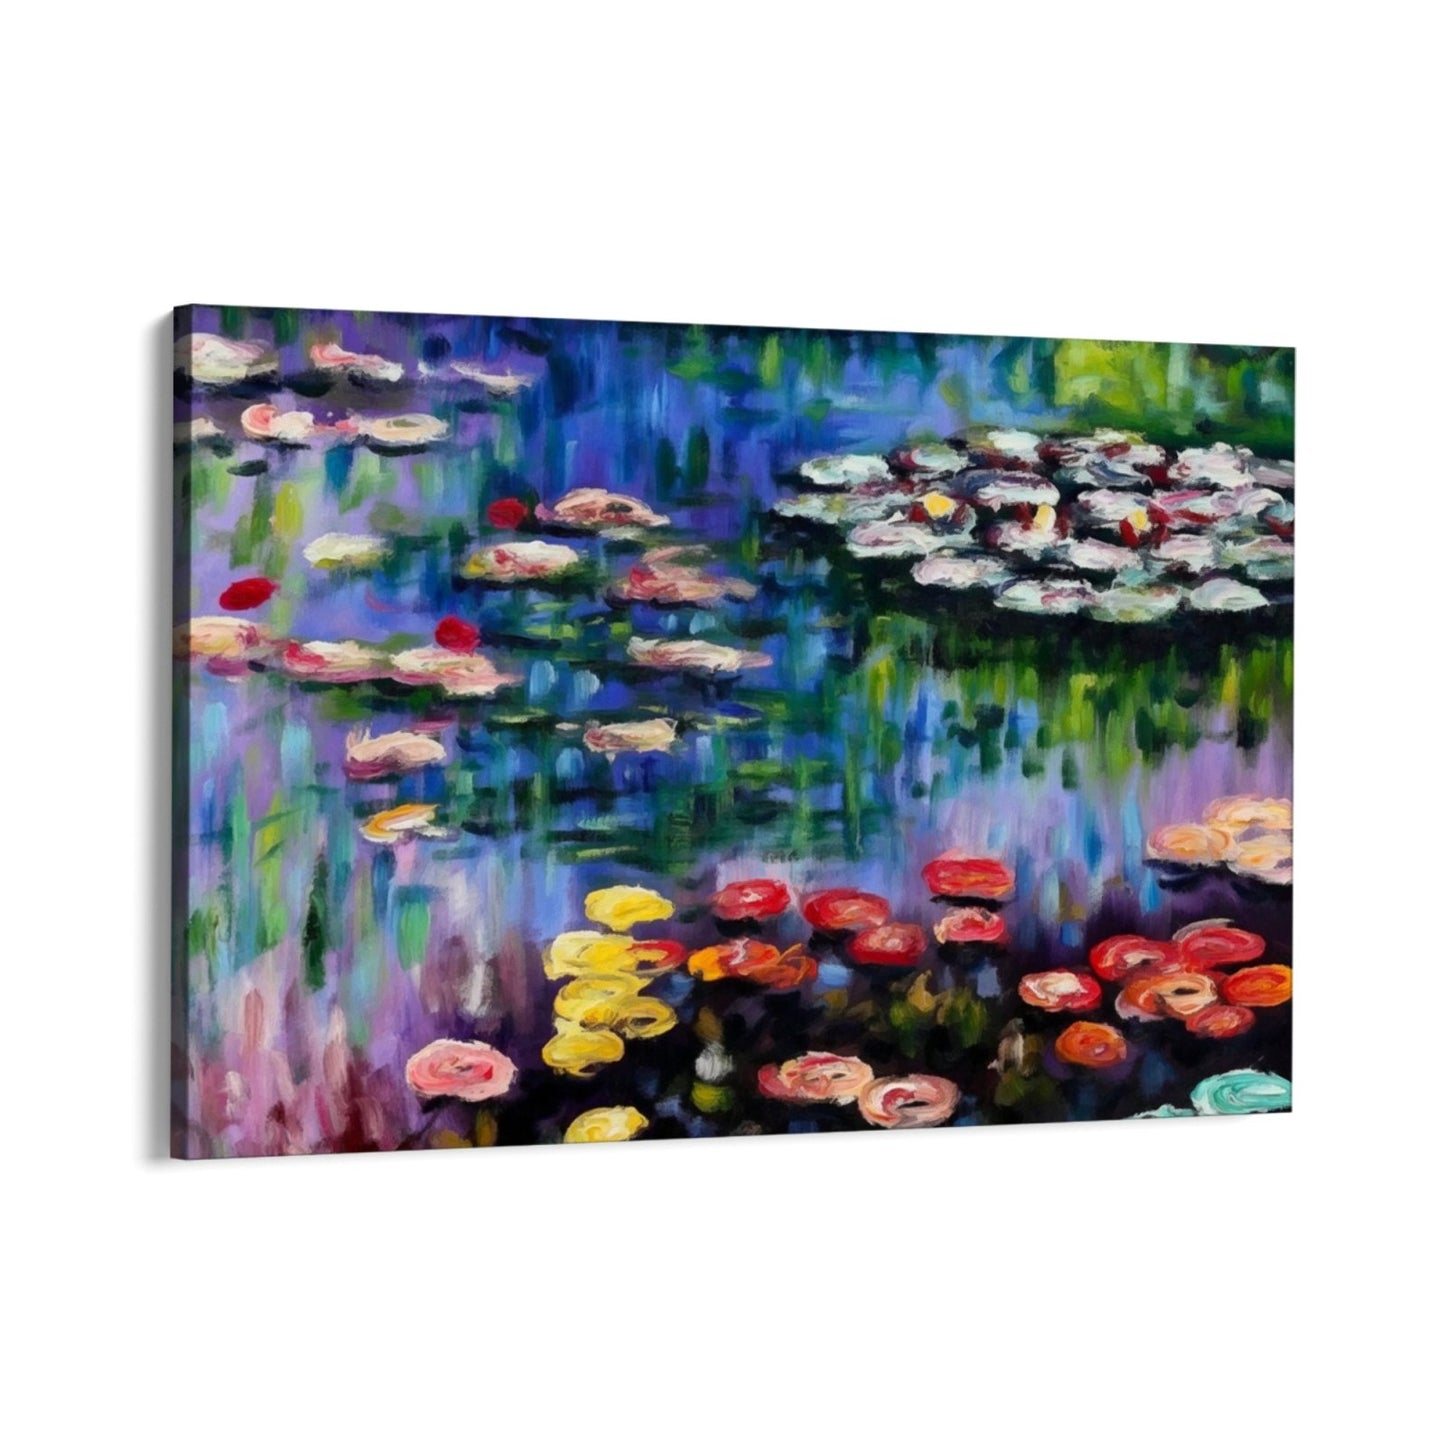 Vesililjat lammen Givernyssä - Claude Monet